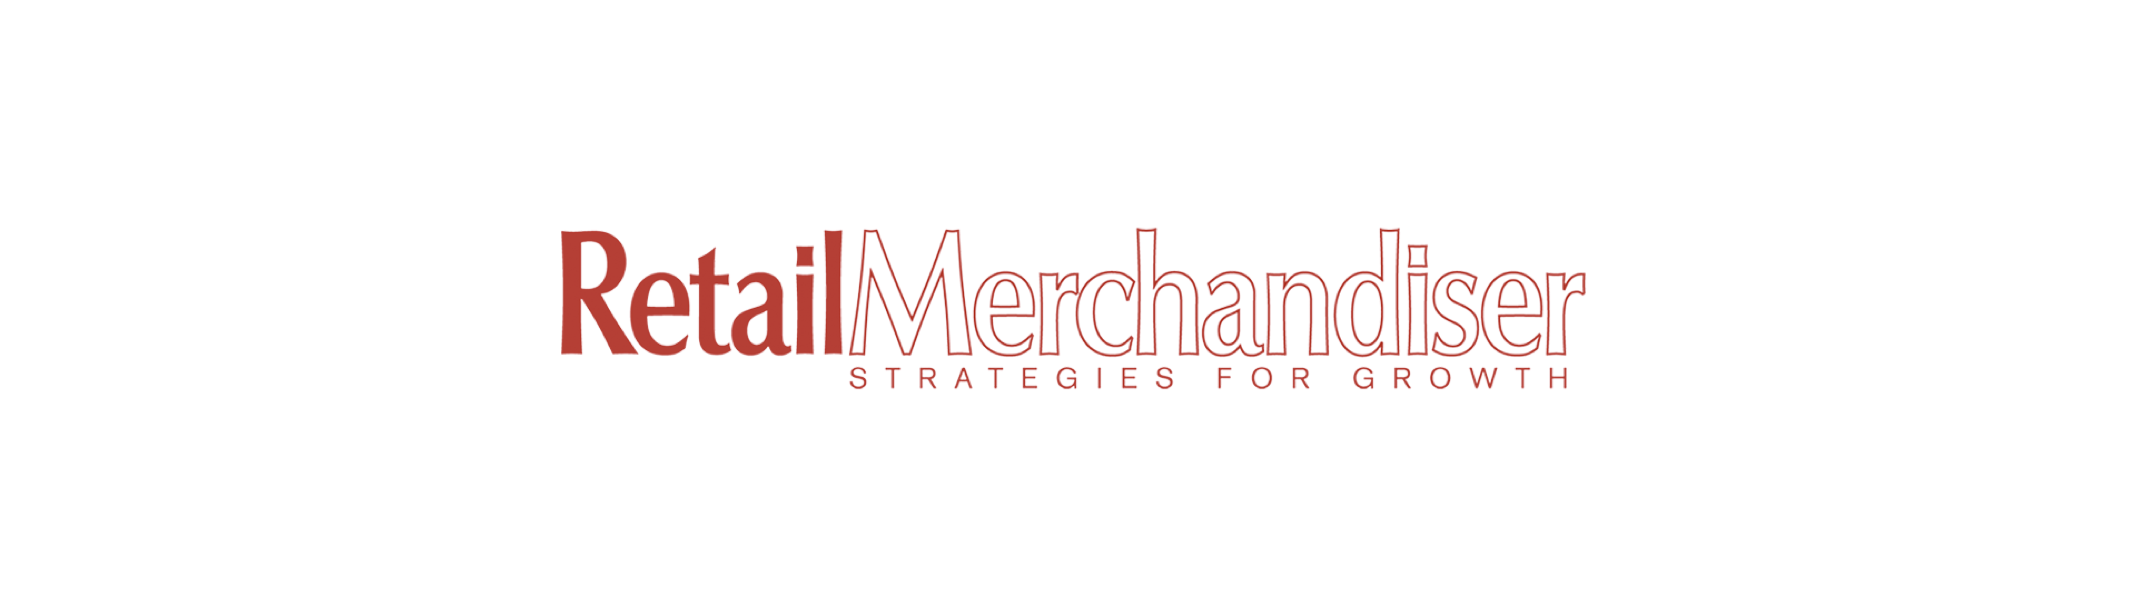 Merchandising Logo - Better Support: 3 Ways to Support Merchandising Partners Through